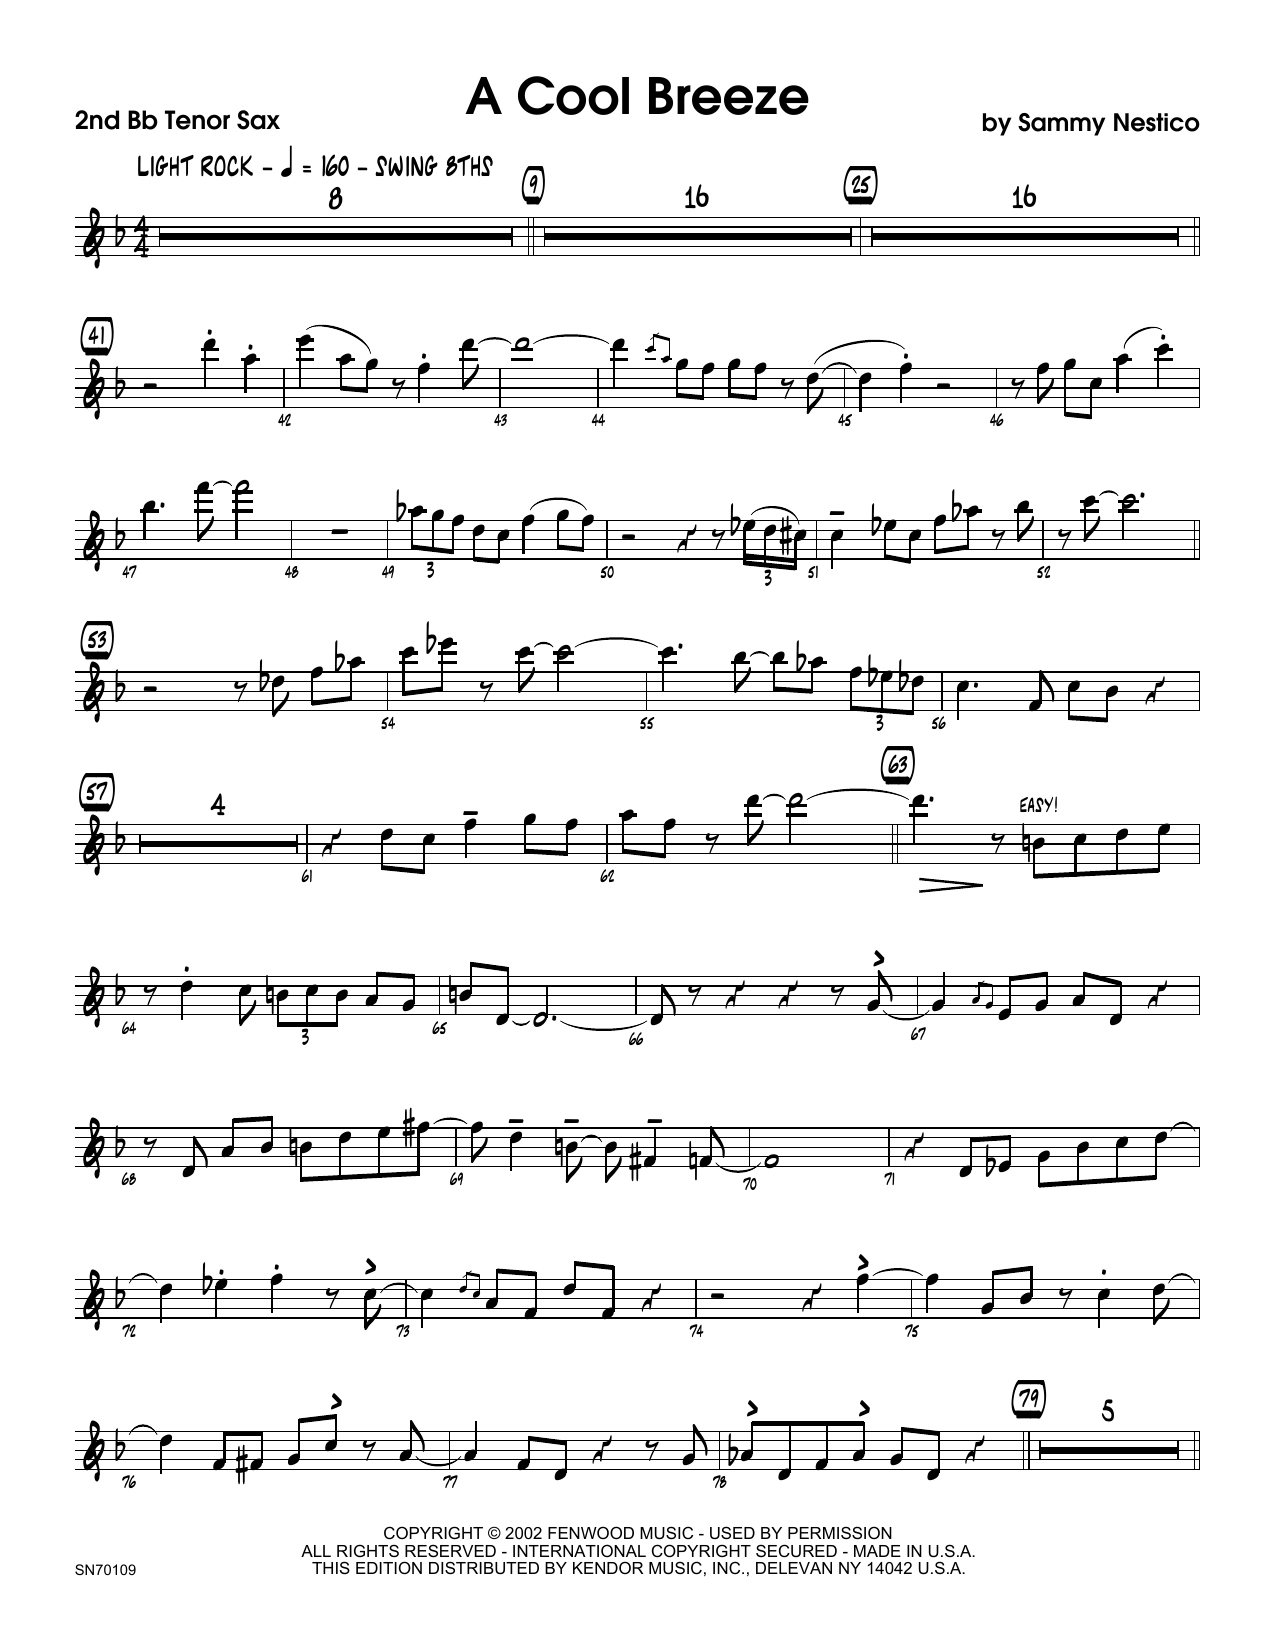 Download Sammy Nestico A Cool Breeze - 2nd Bb Tenor Saxophone Sheet Music